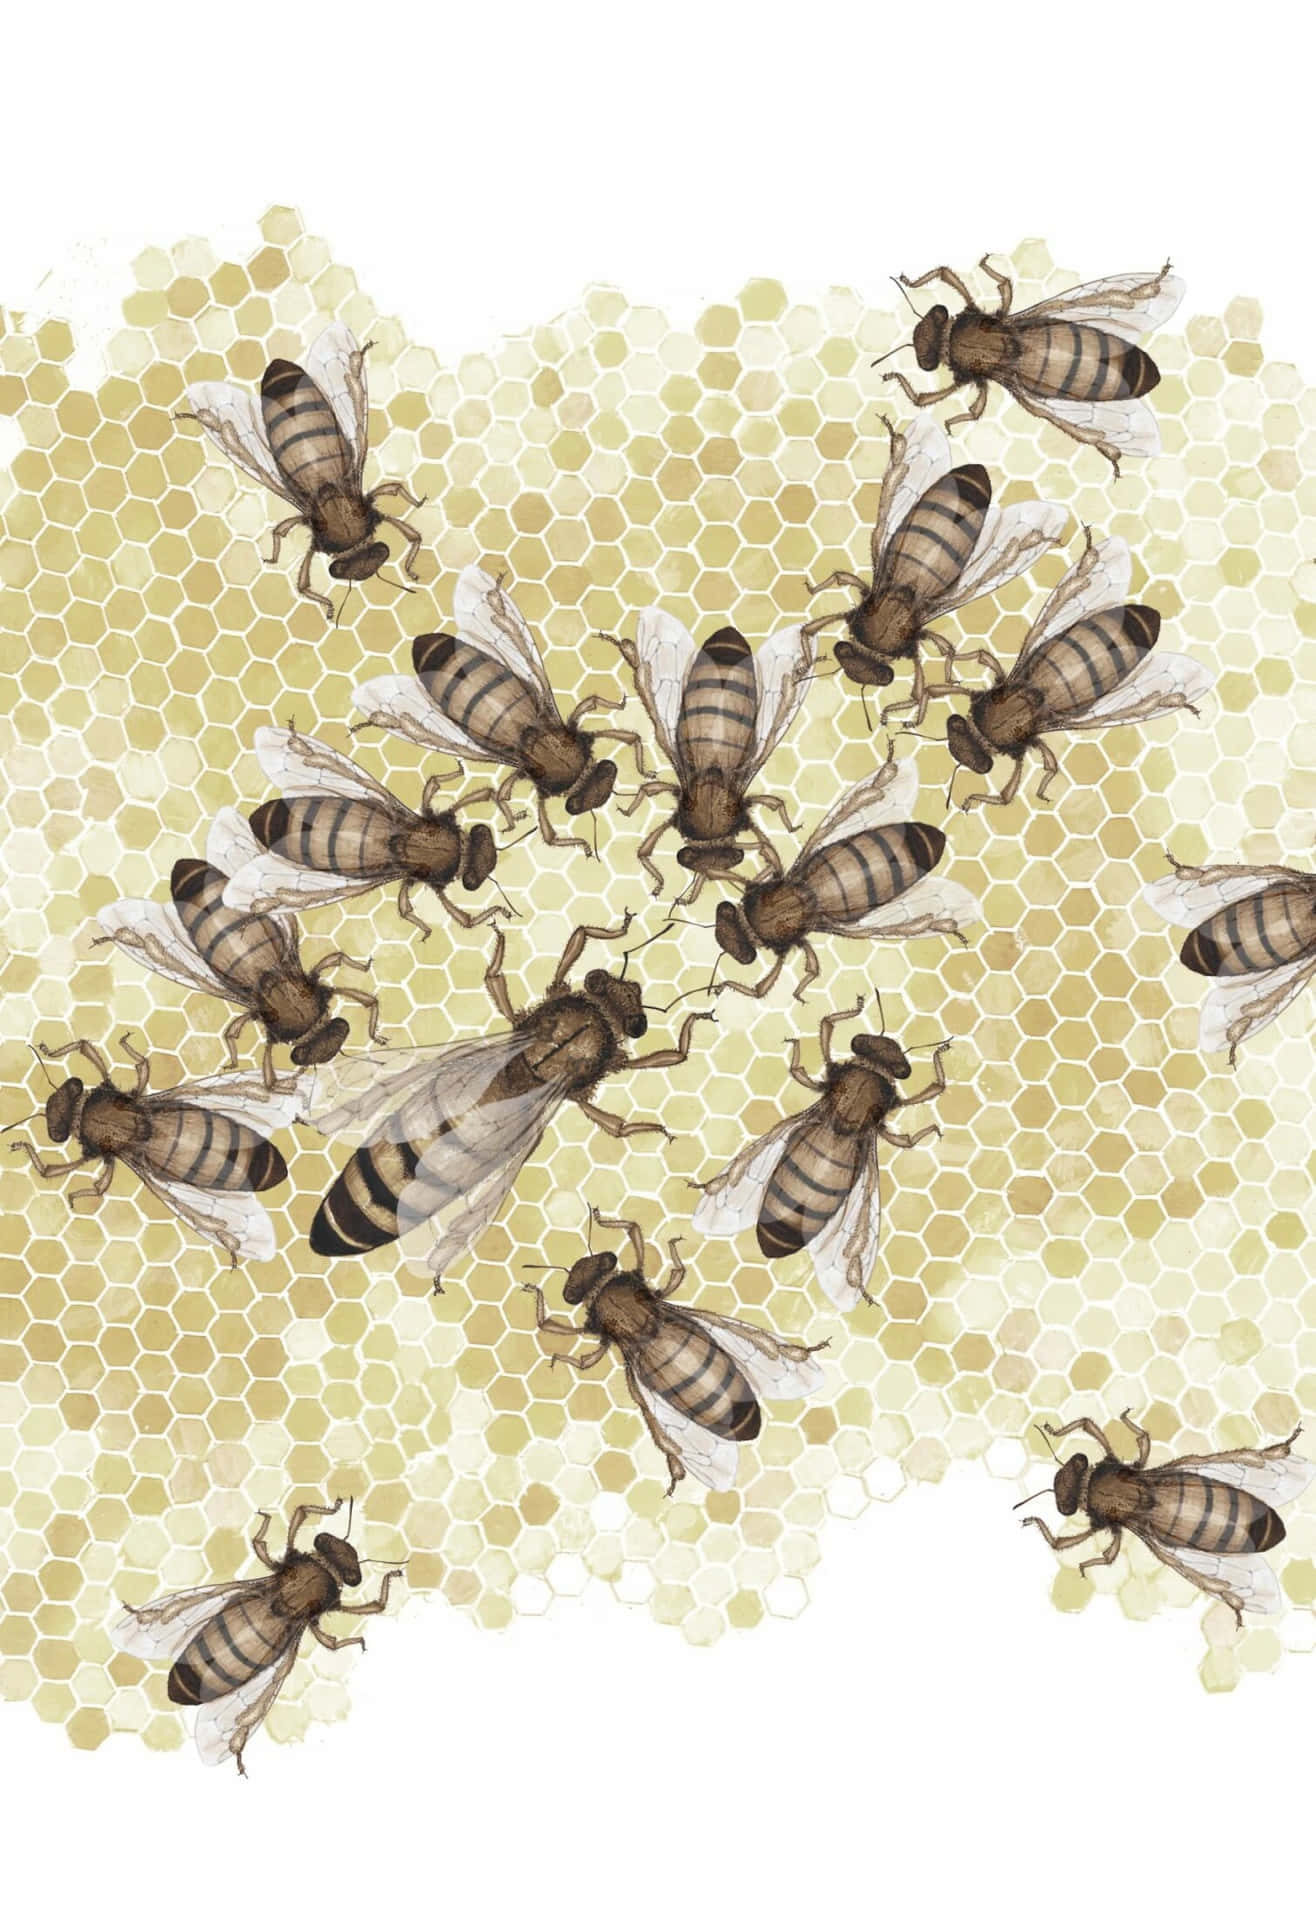 Vintage Honeycomband Bees Illustration Wallpaper